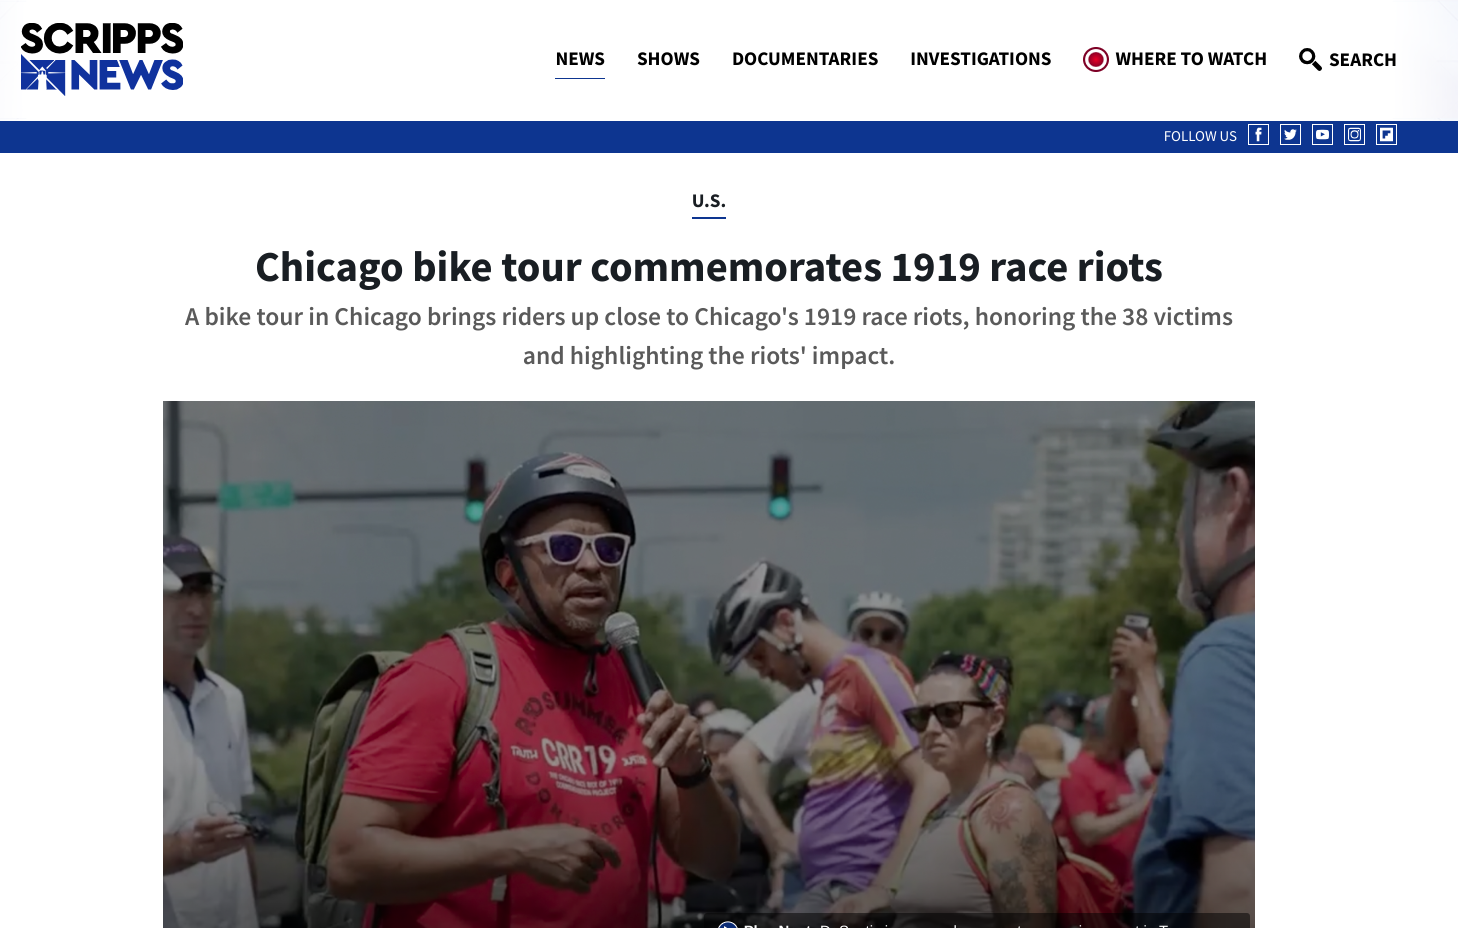 Scripps News: Chicago bike tour commemorates 1919 race riots